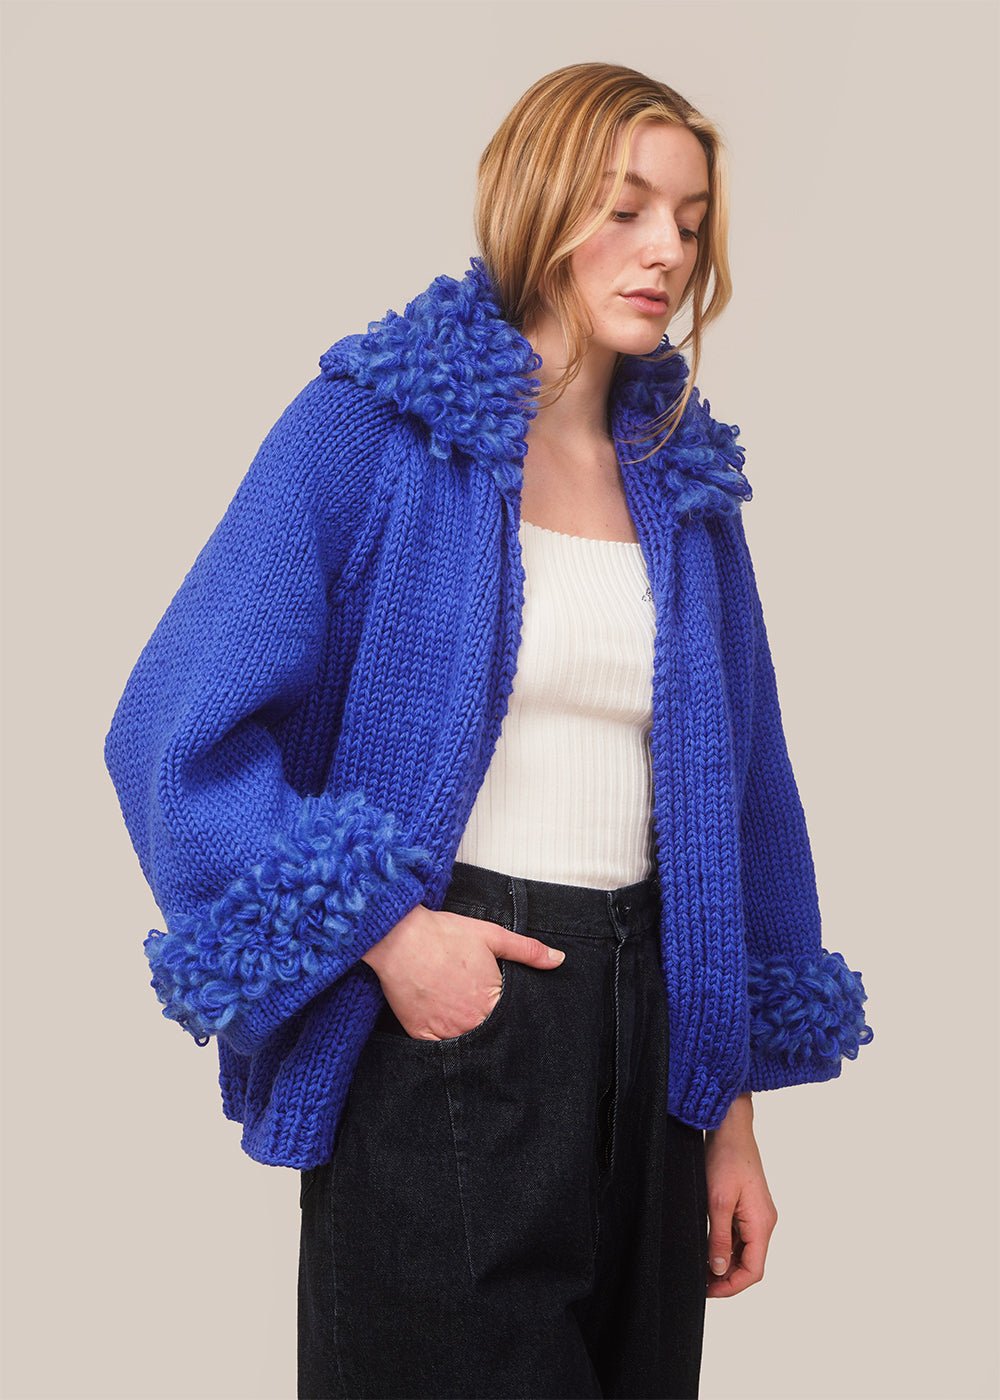 Frisson Knits Blue Fleur Jacket - New Classics Studios Sustainable Ethical Fashion Canada